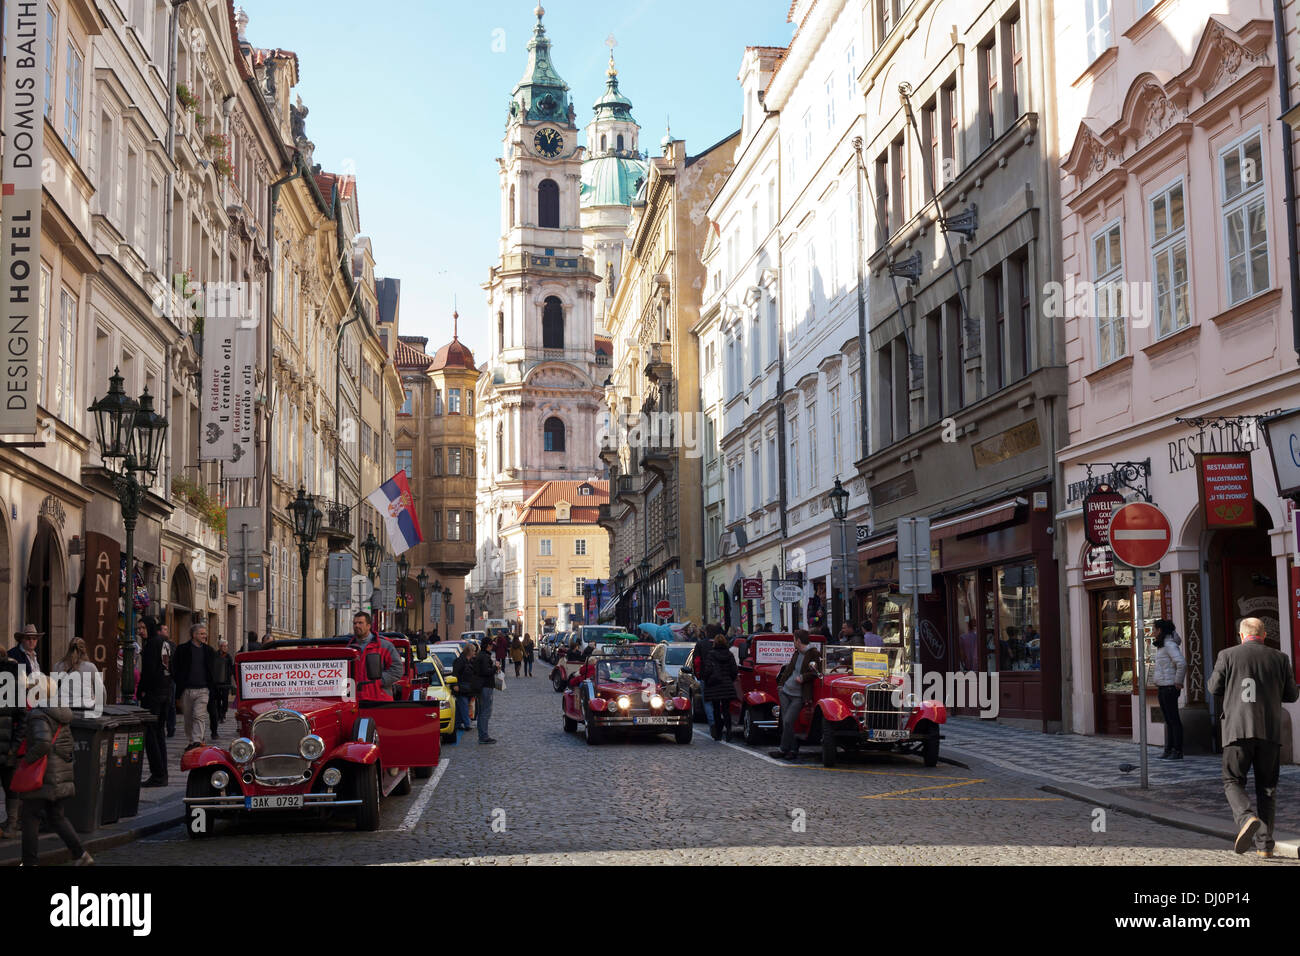 Prague. Old automobiles. Old town. Stock Photo